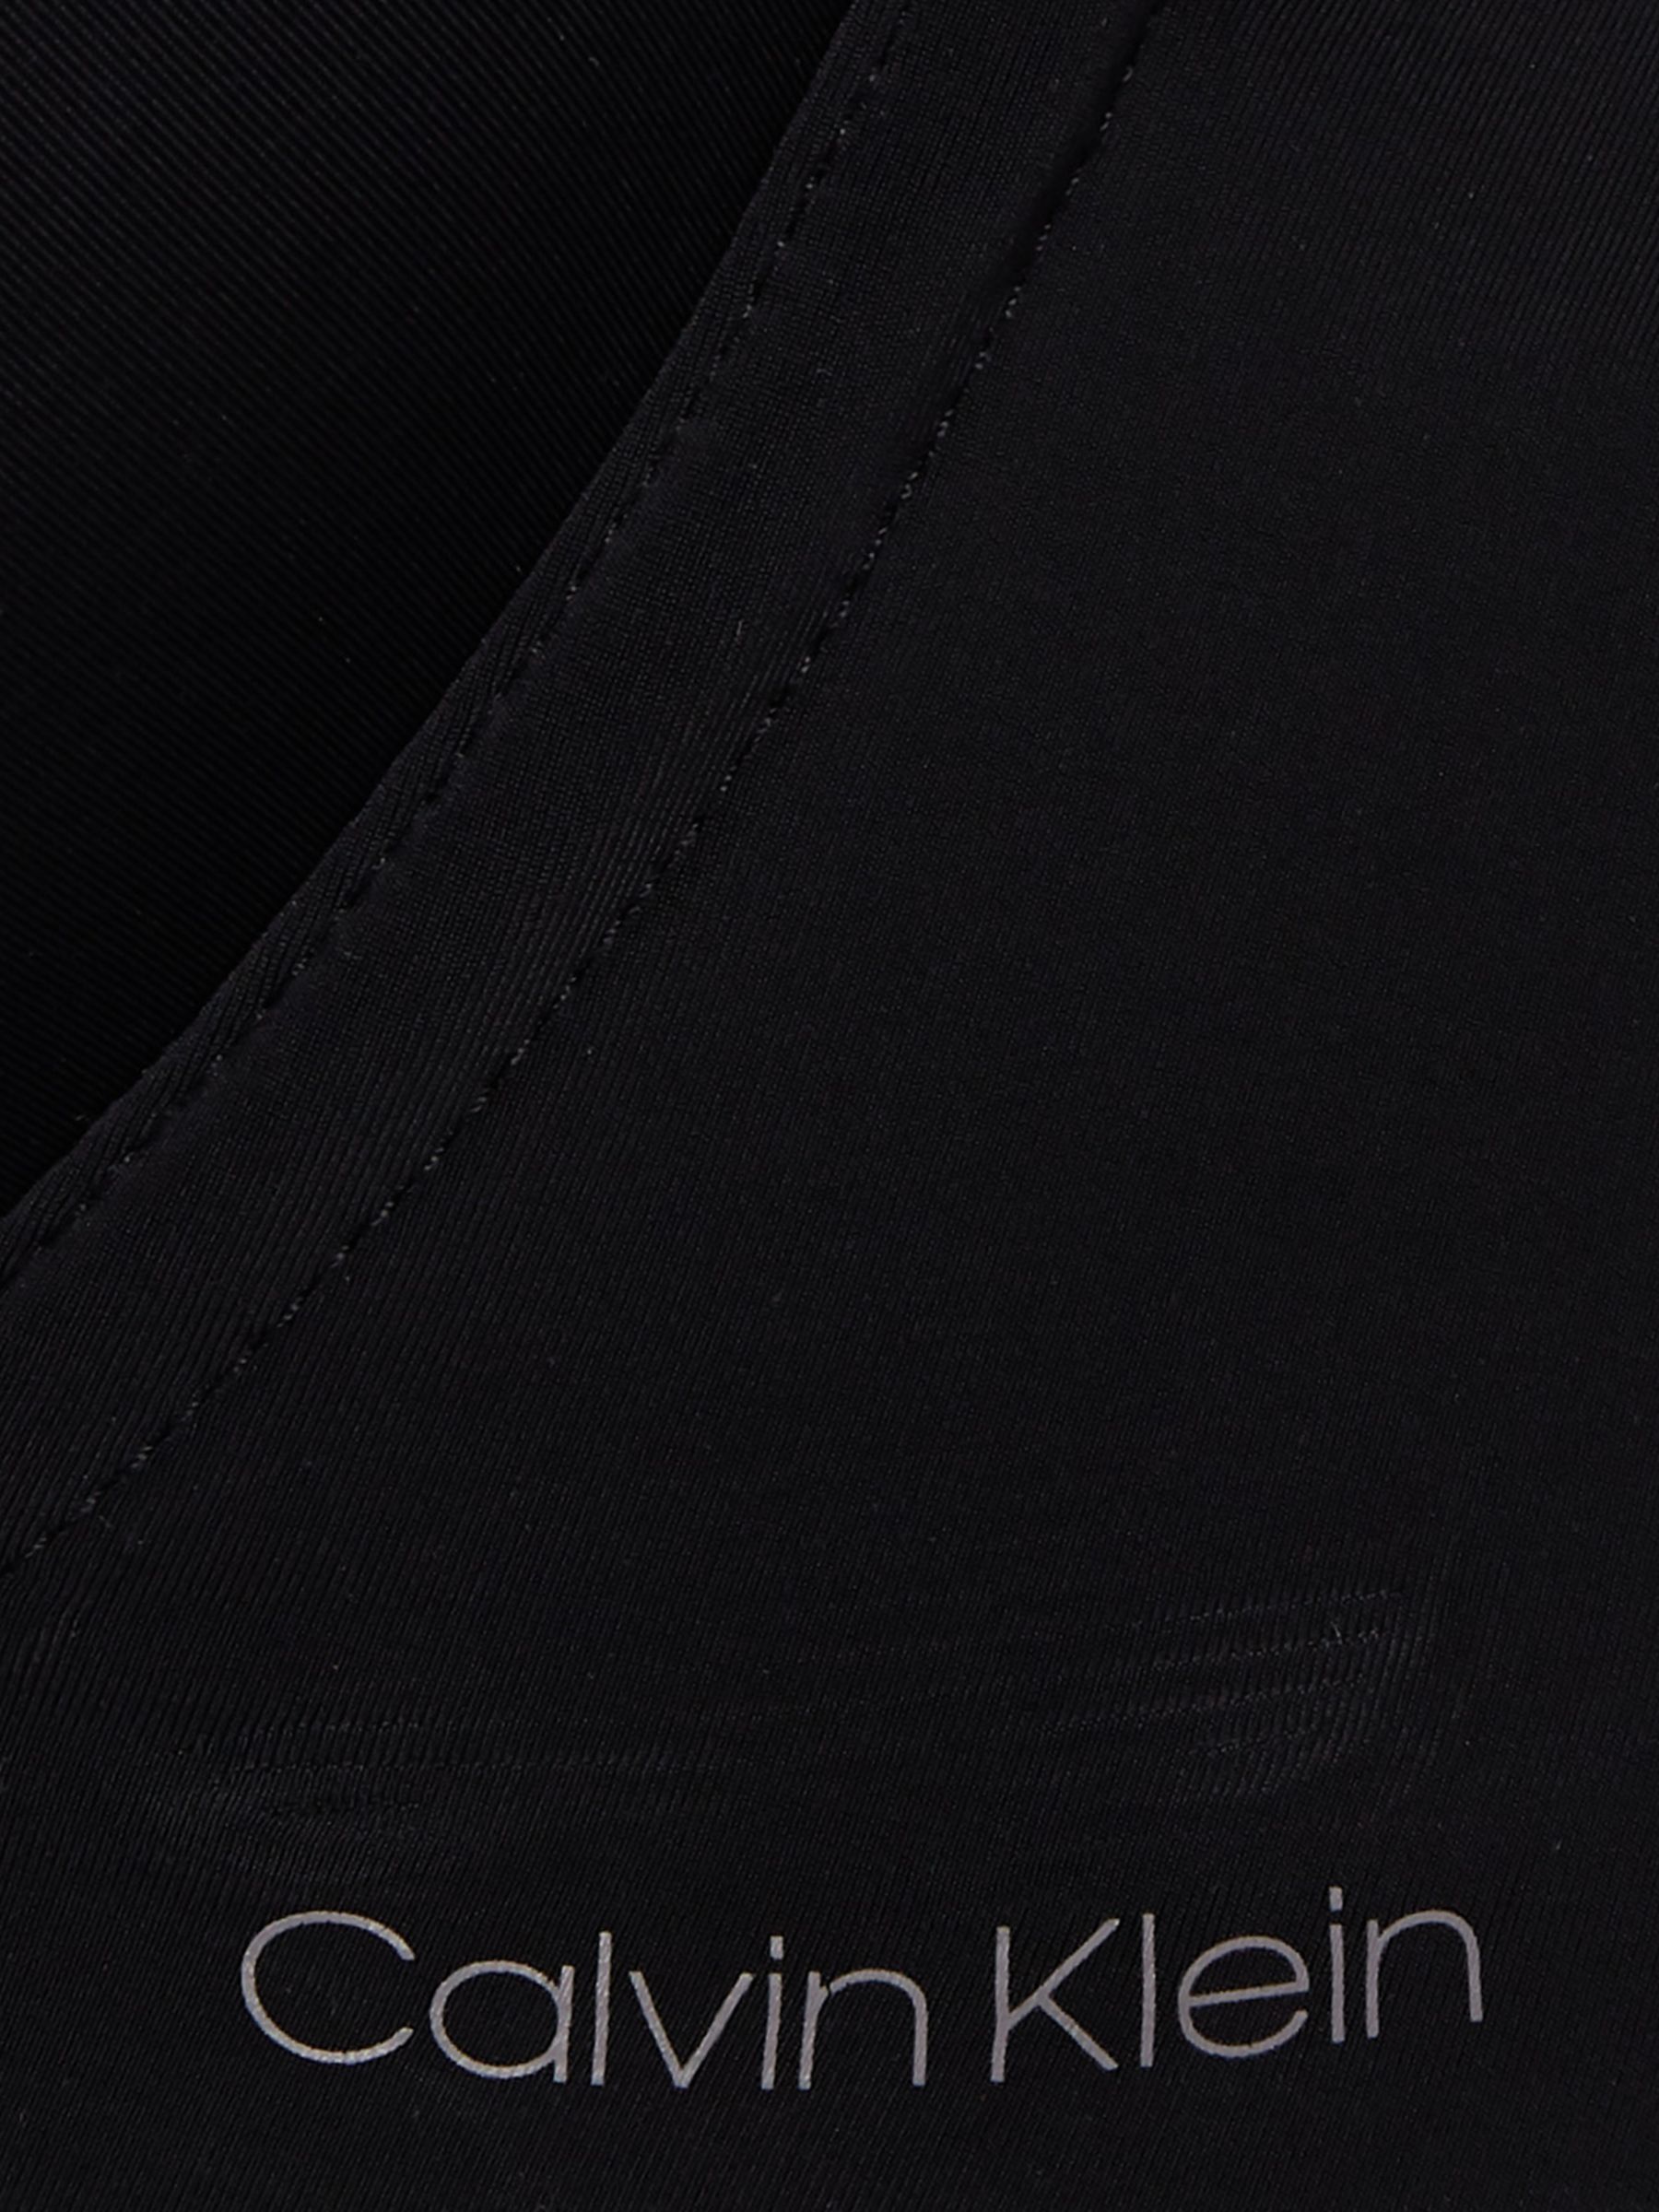 Calvin Klein Seductive Comfort Lift Demi Bra, Black, 32B